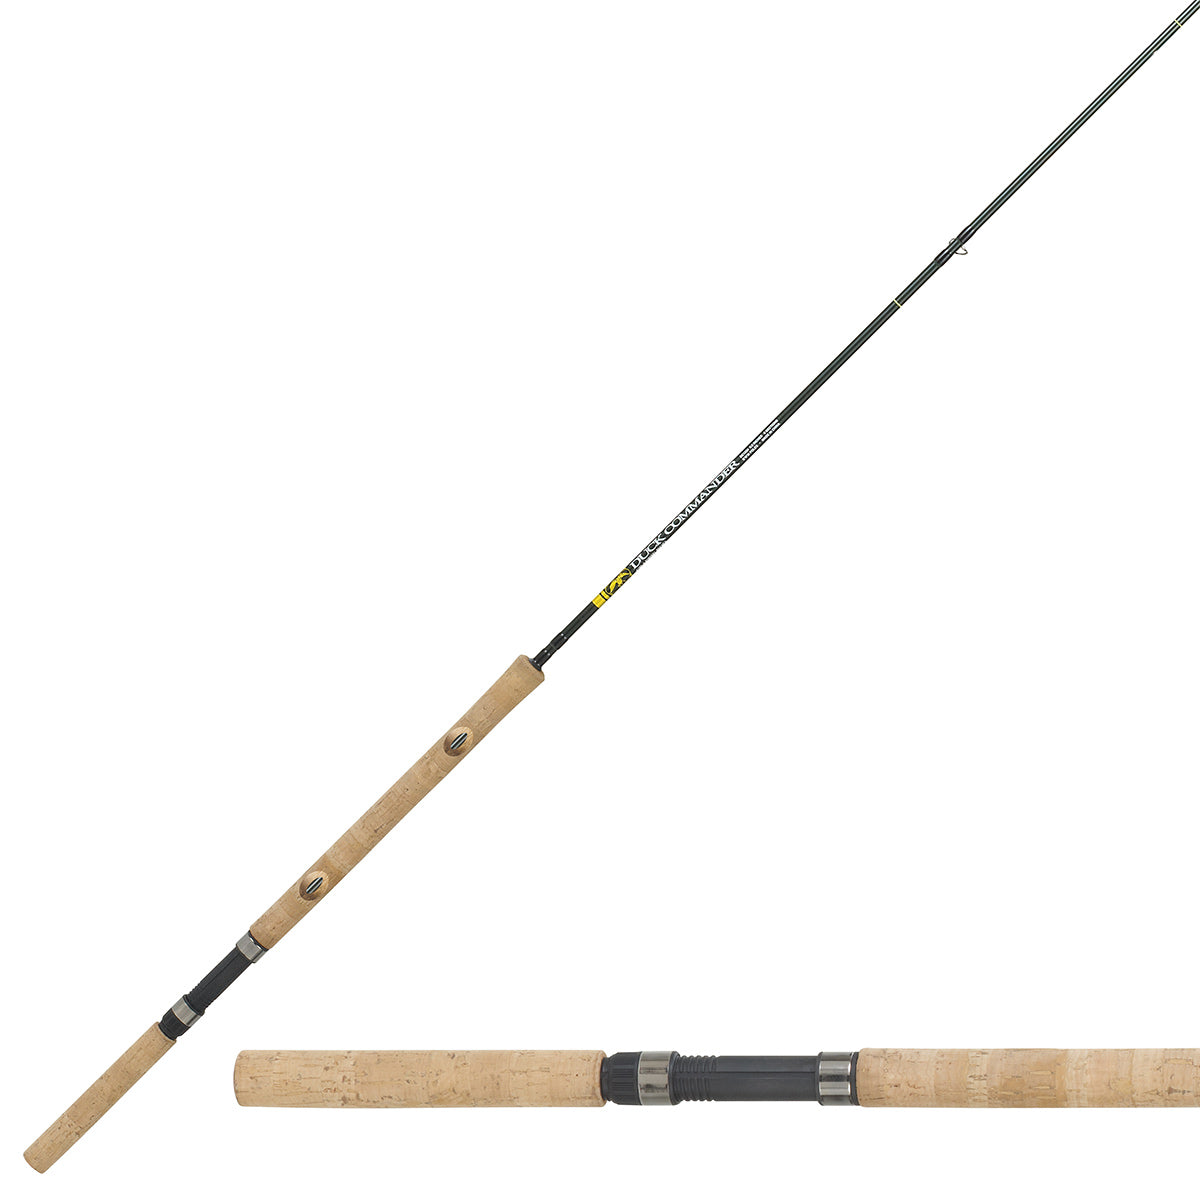 Robertson: An all-around fishing pole?, Sports